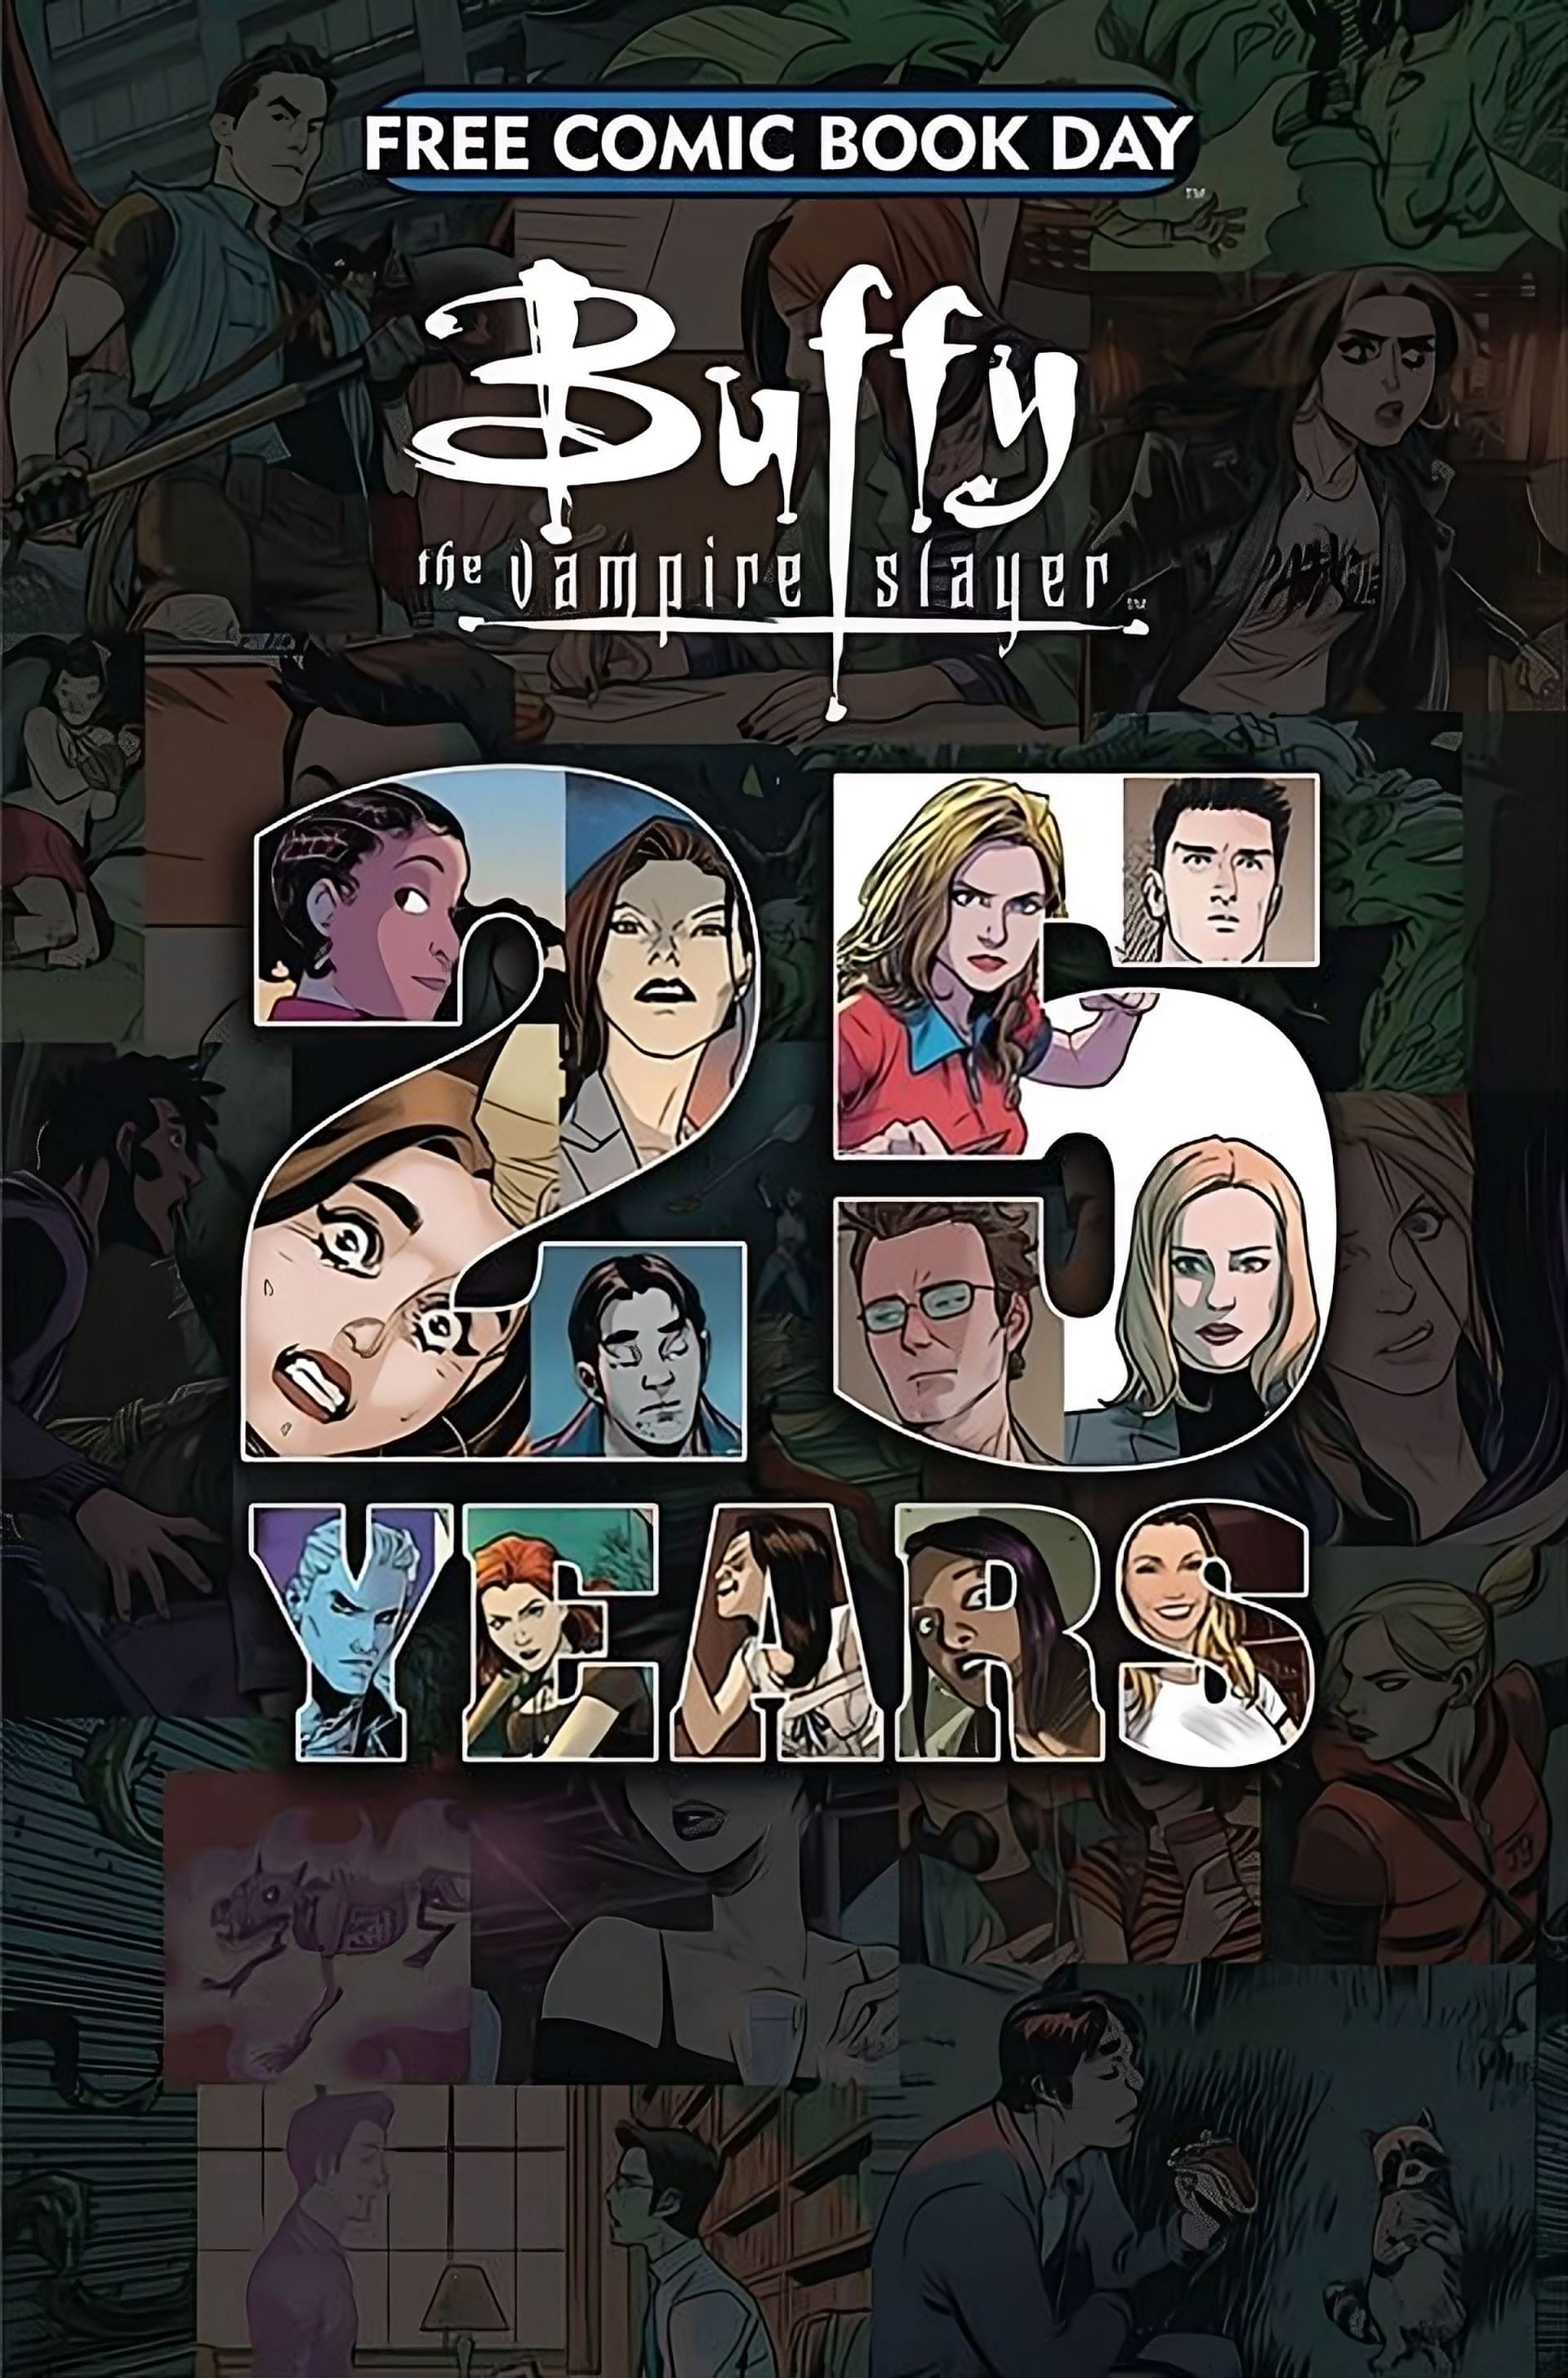 Comic cover (Image via Boom! Studios)